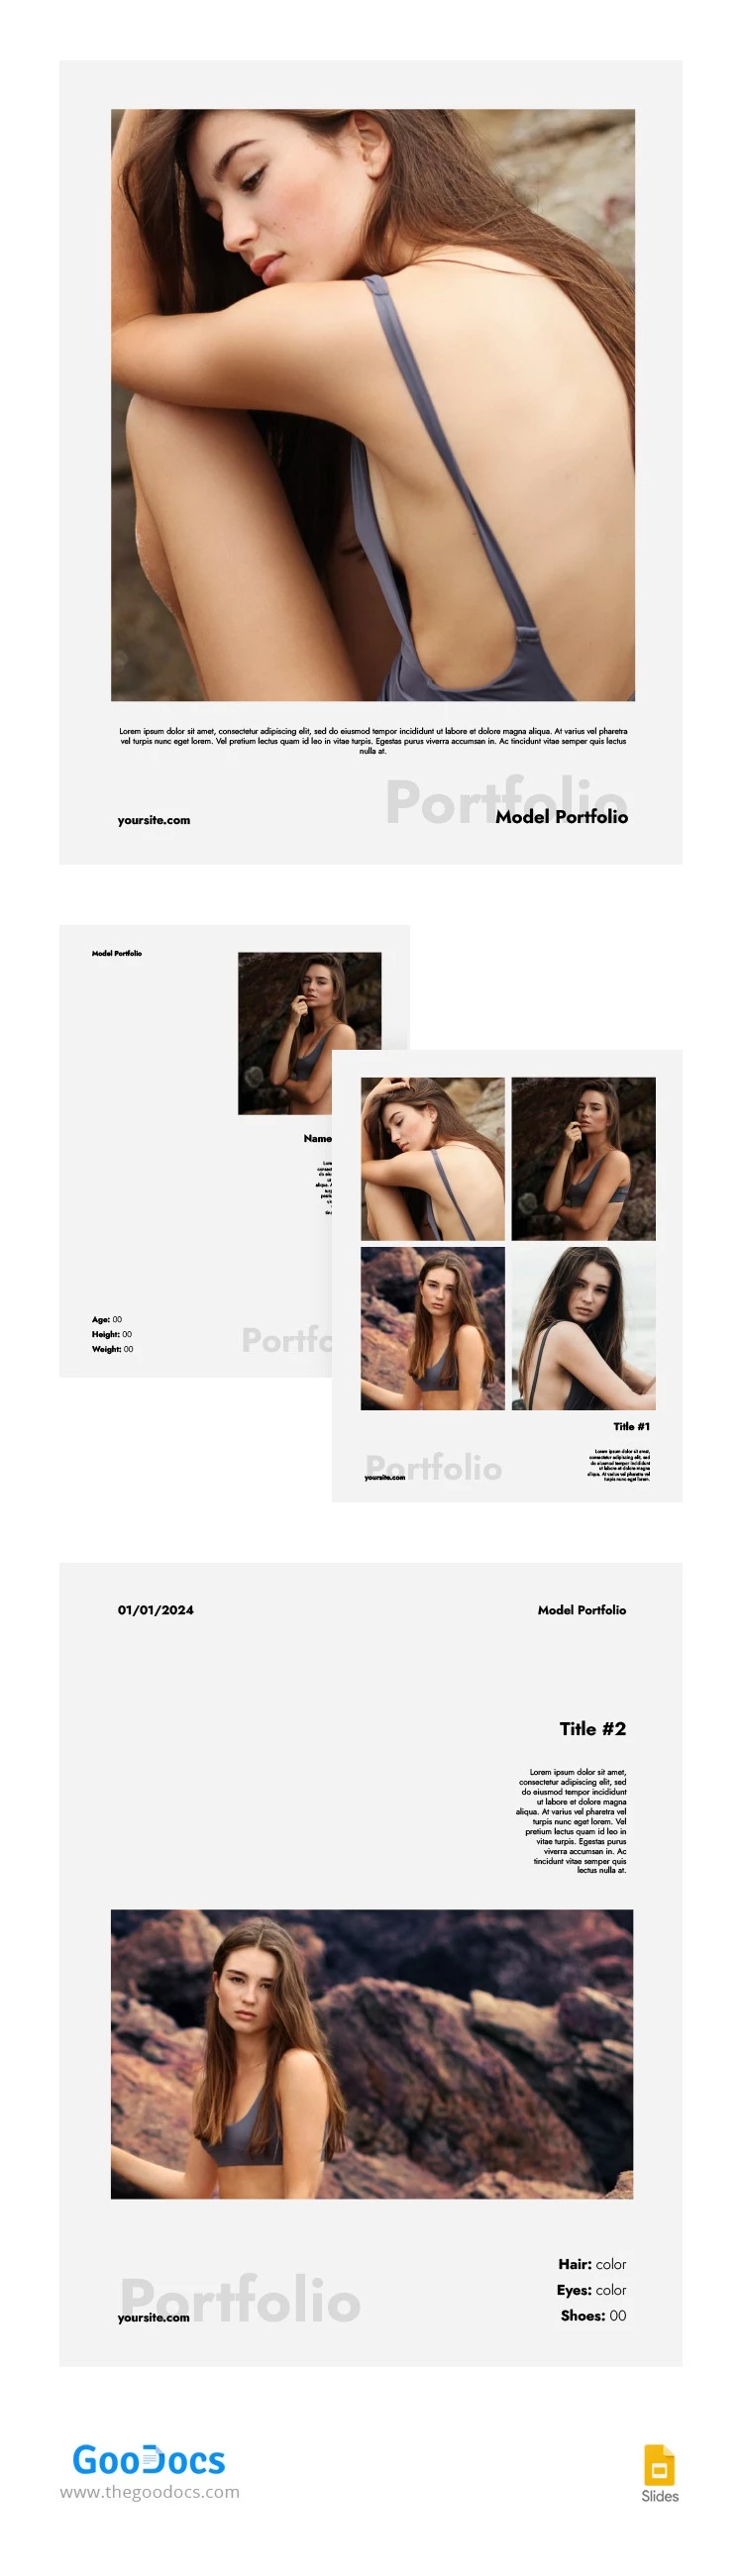 Portafolio de modelos moderno y minimalista. - free Google Docs Template - 10065908